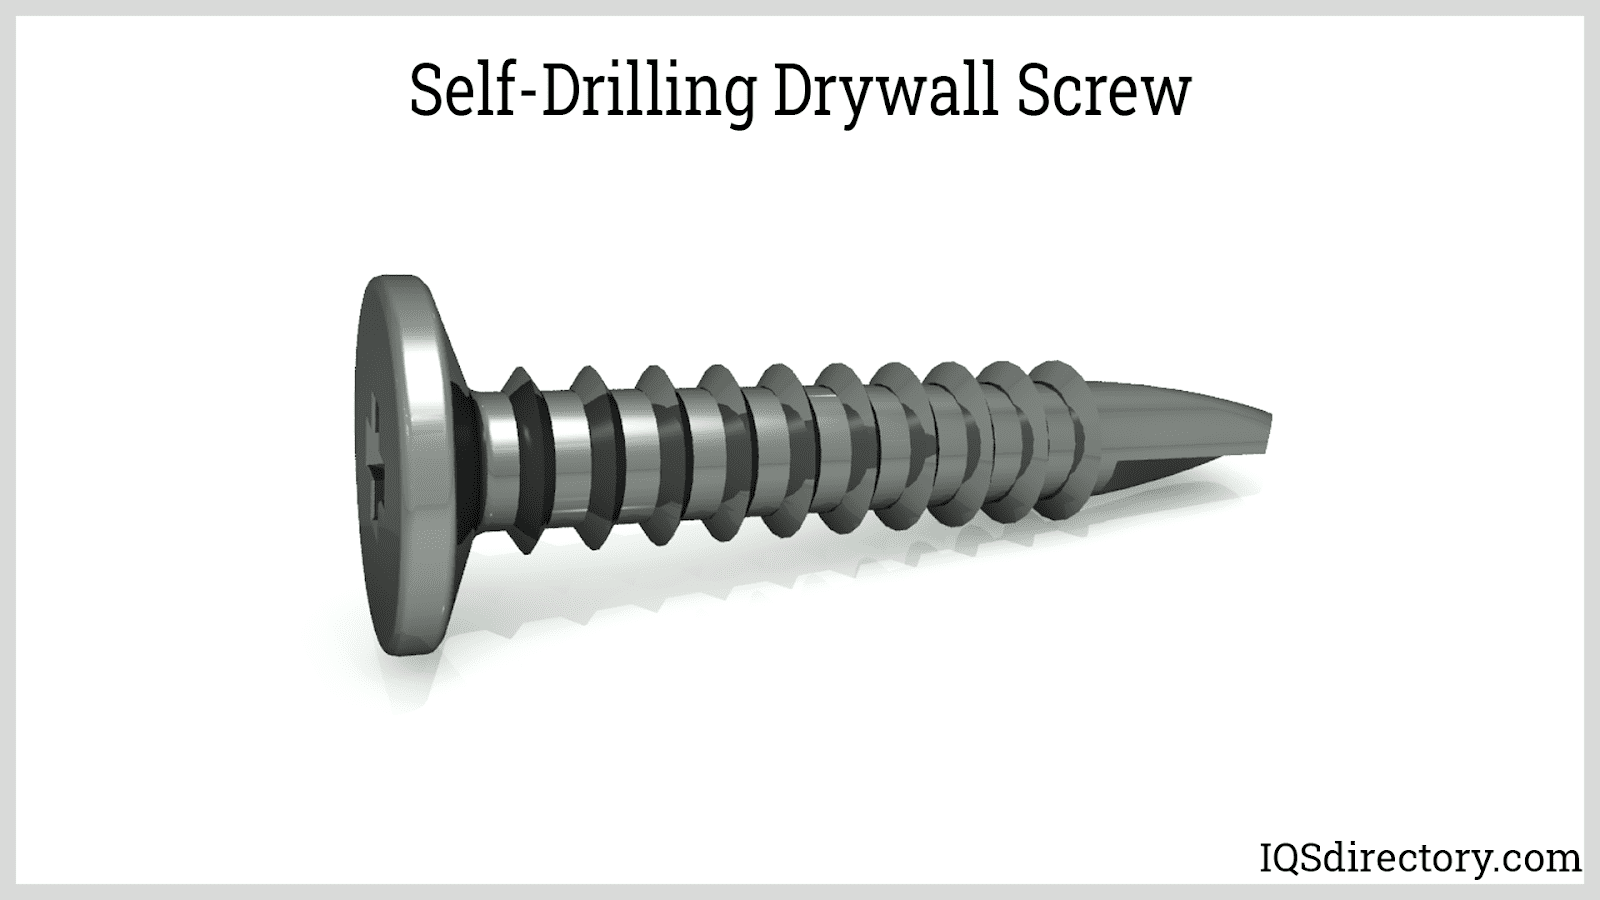 Self-Drilling Drywall Screw